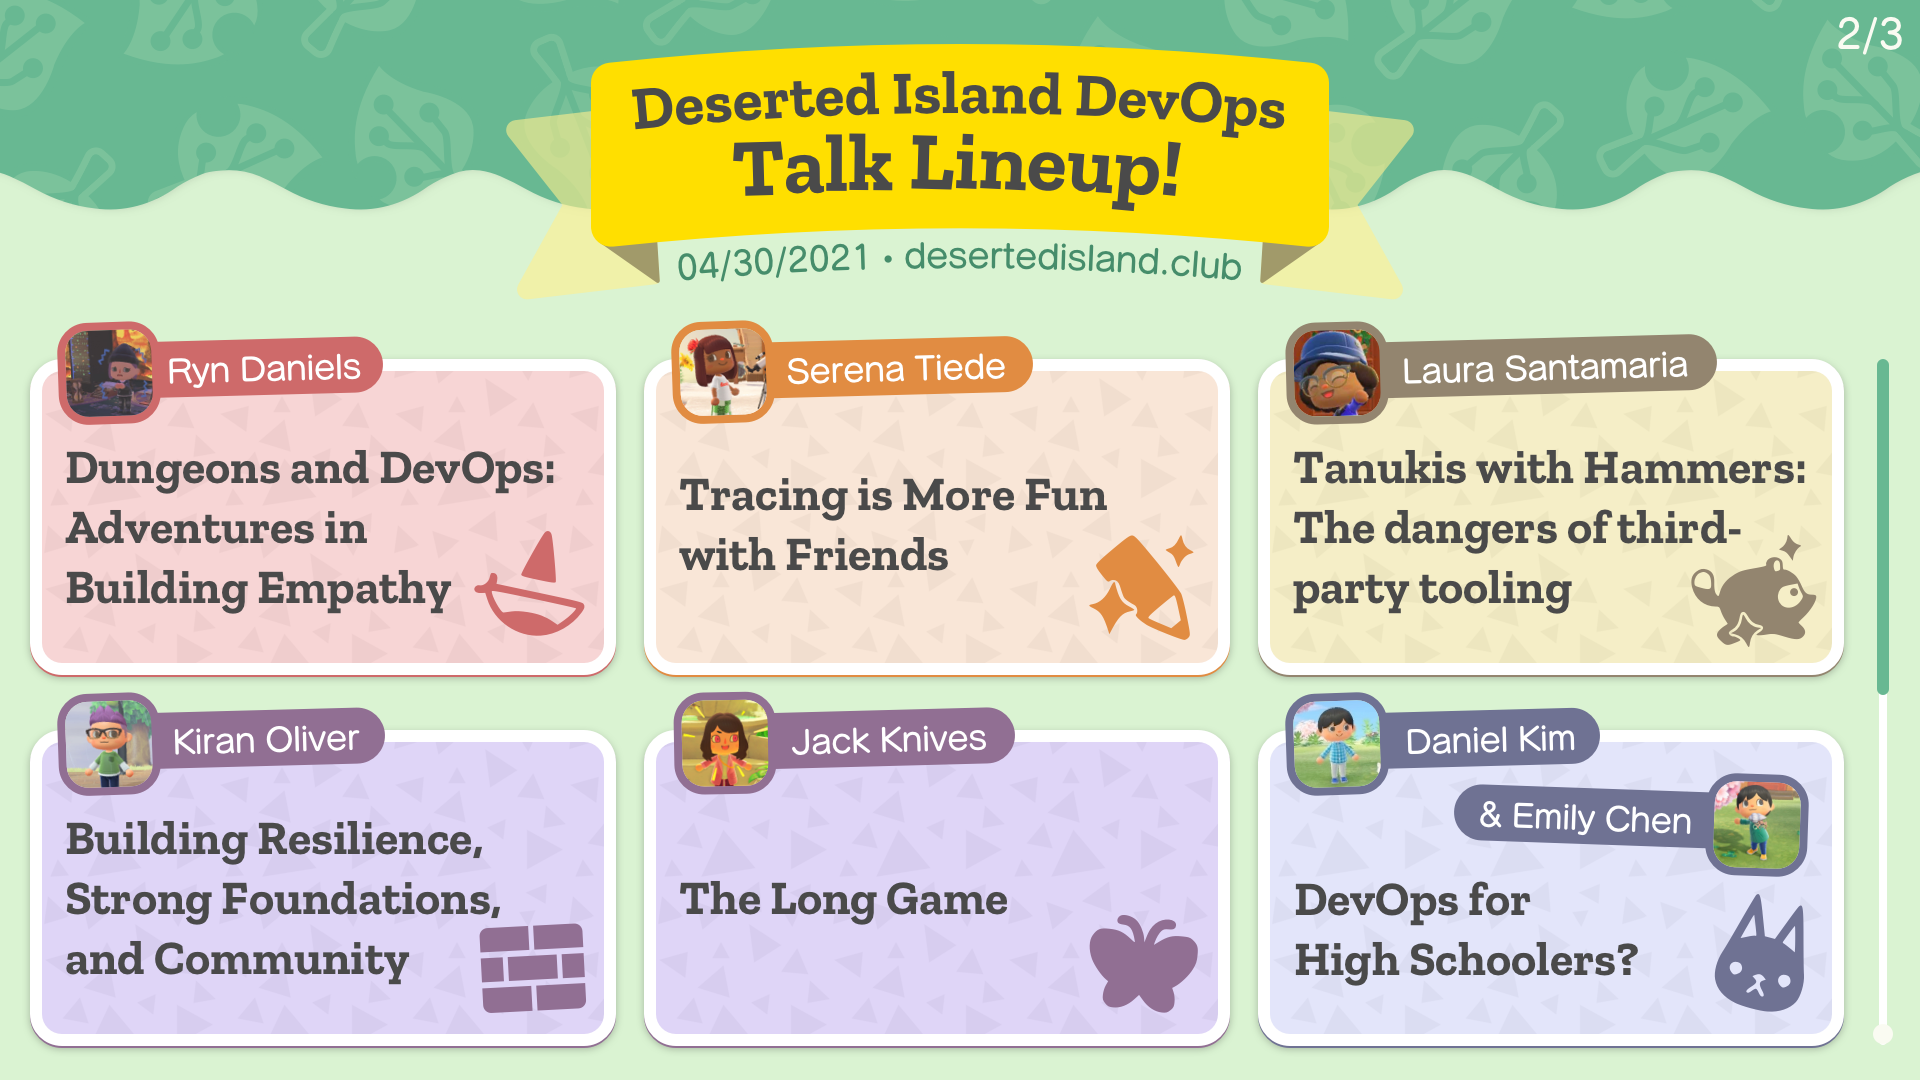 Deserted Island DevOps talk lineup!